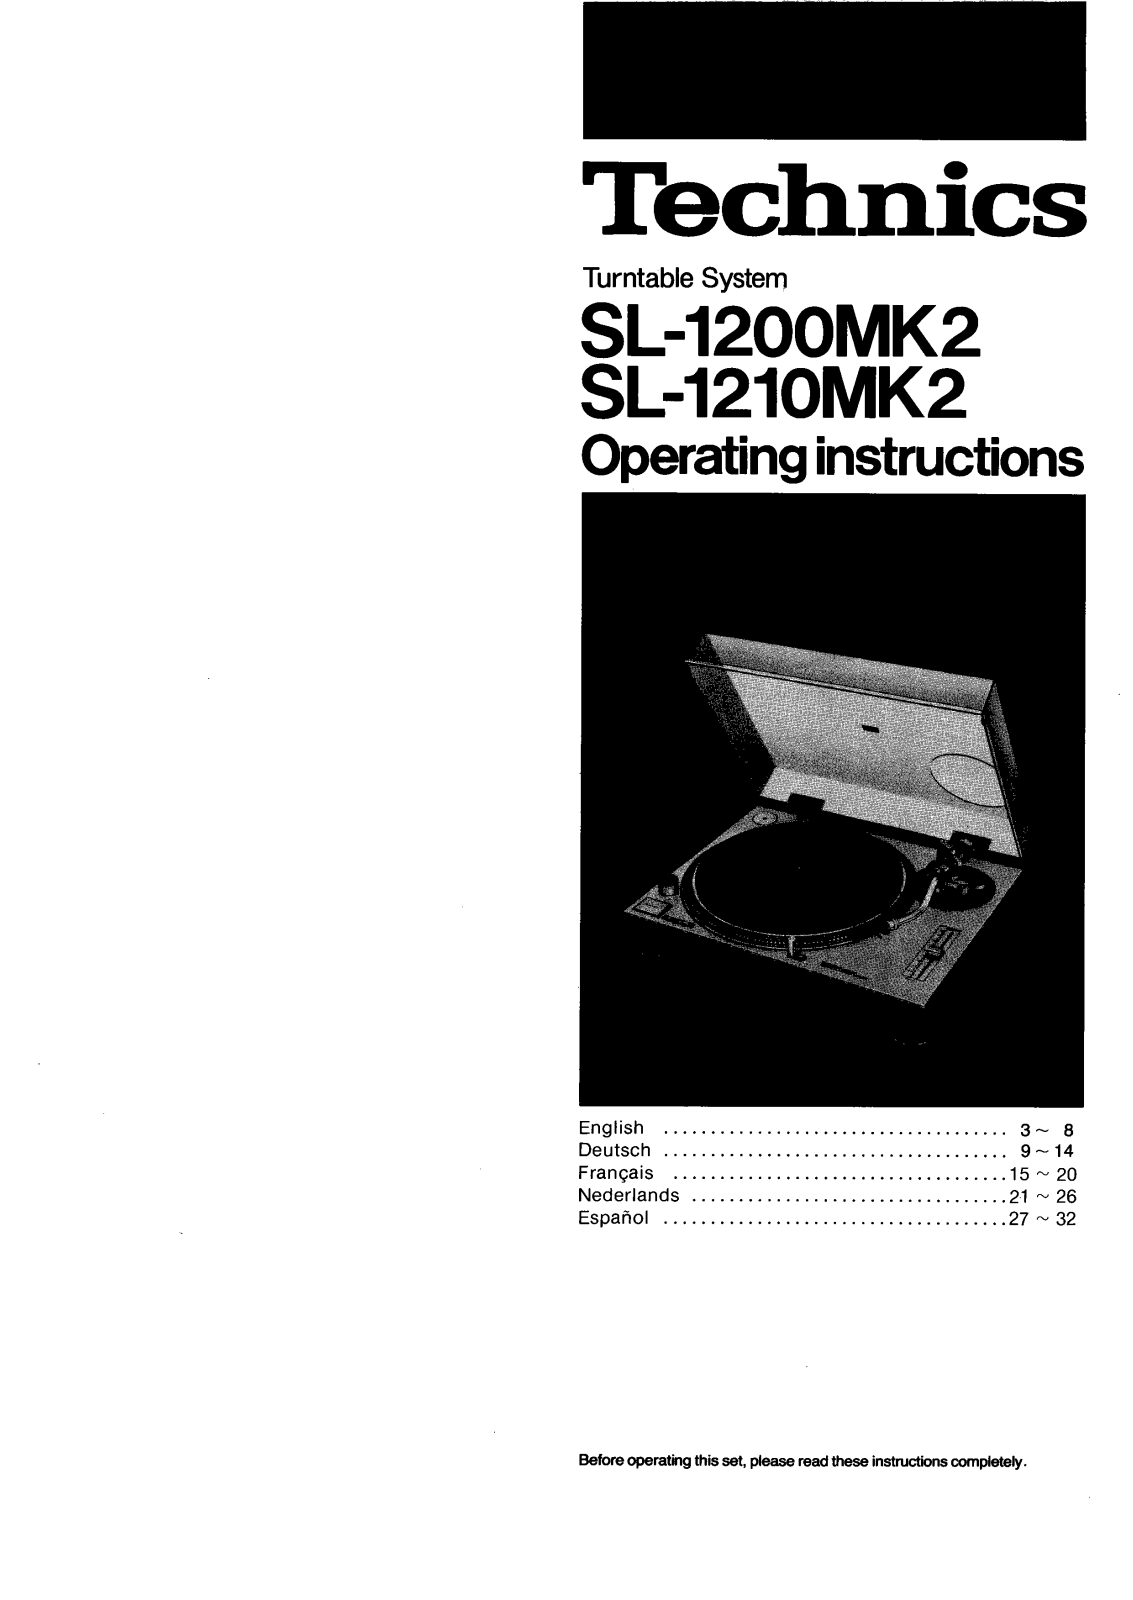 TECHNICS SL-1210MK2 User Manual